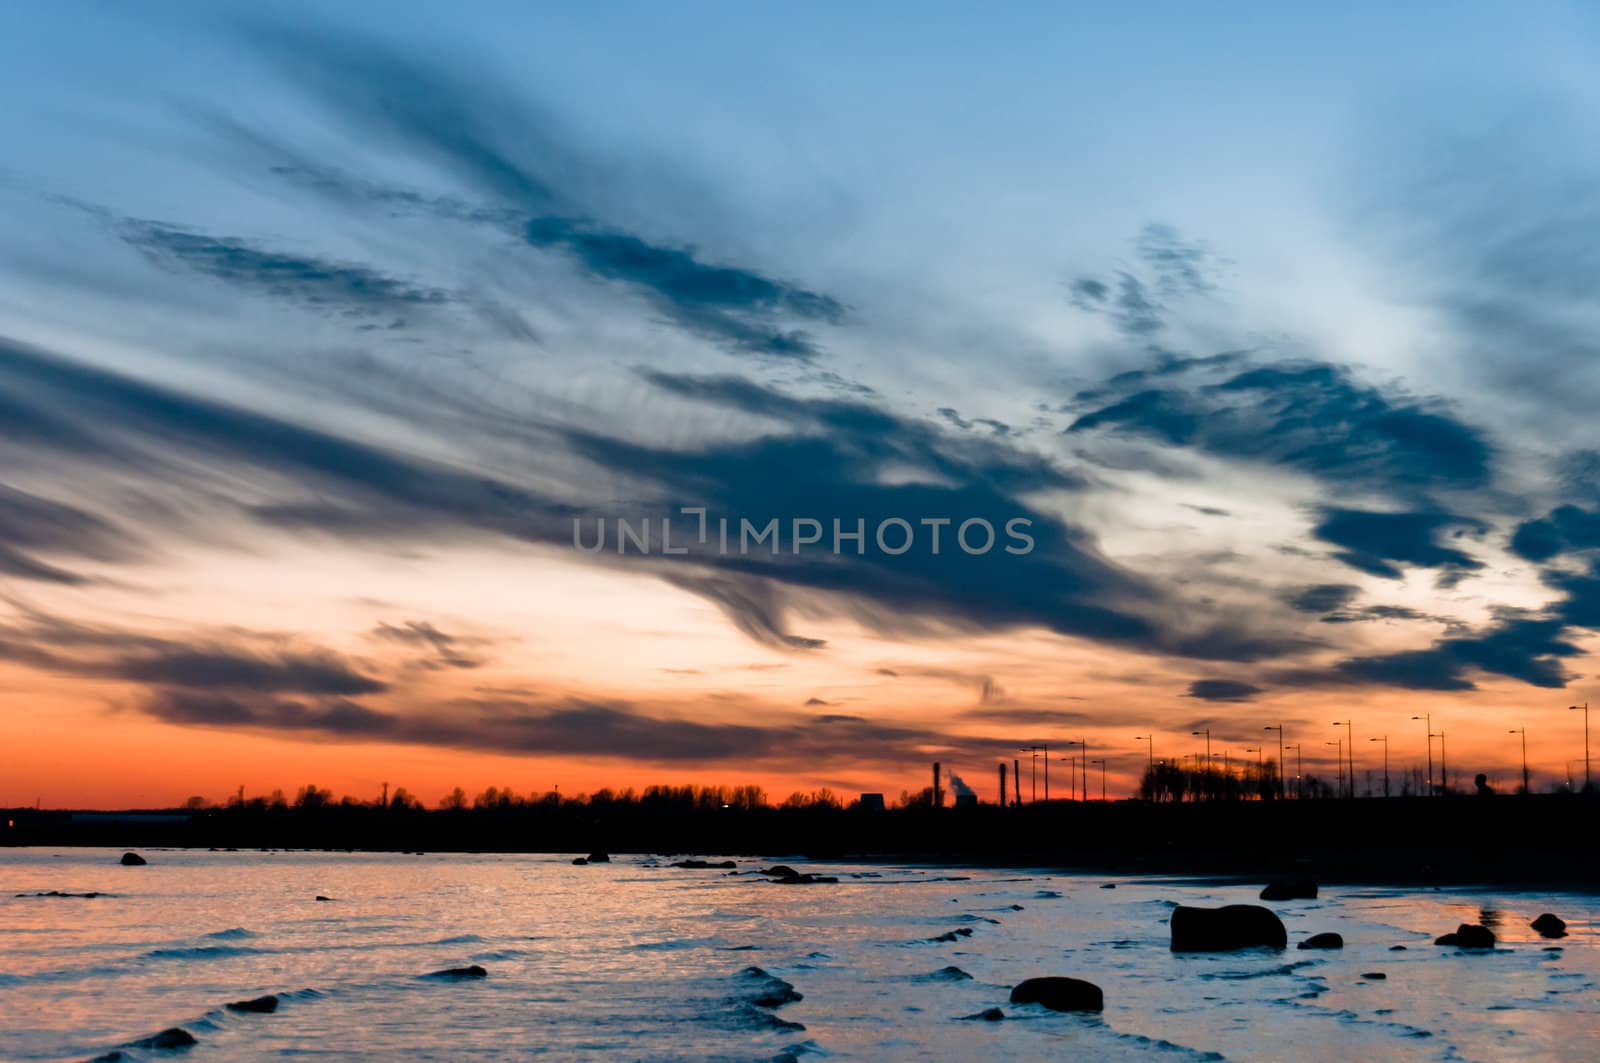 Late sunset over the lake by dmitryelagin